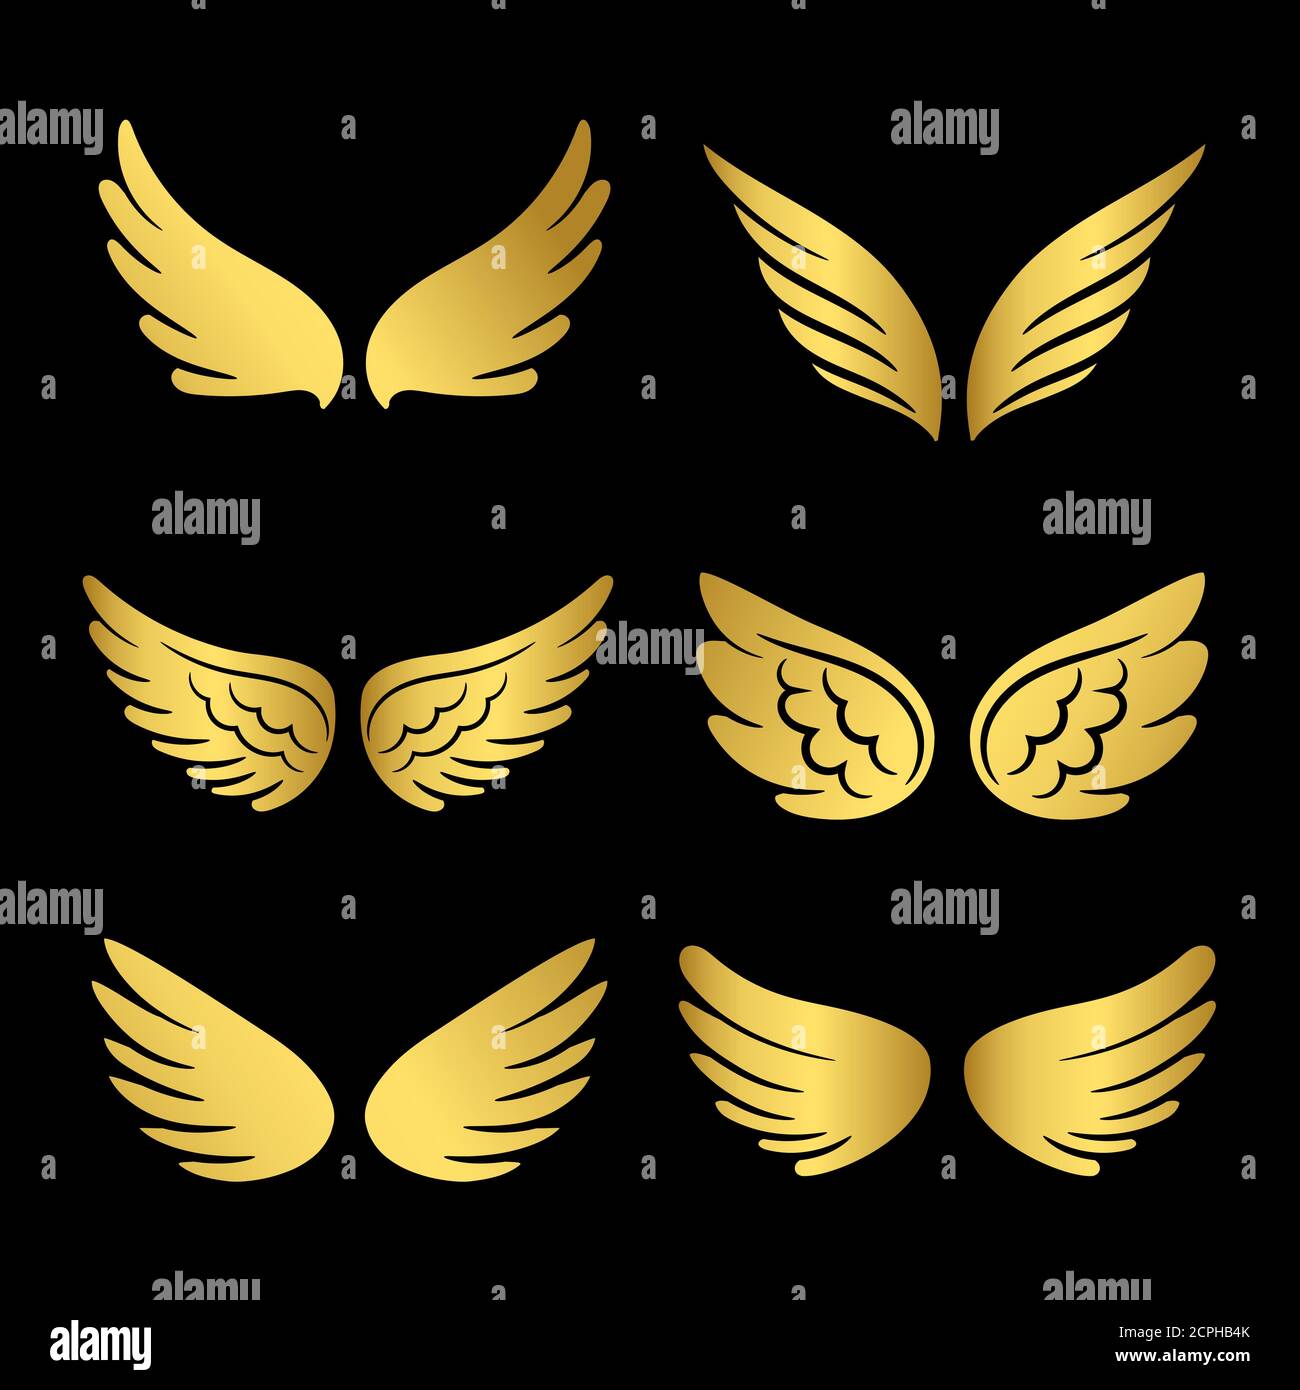 Golden Wings Vektor-Kollektion. Engel Flügel isoliert auf schwarzem Hintergrund. Illustration des goldenen Engelsflügelset Stock Vektor